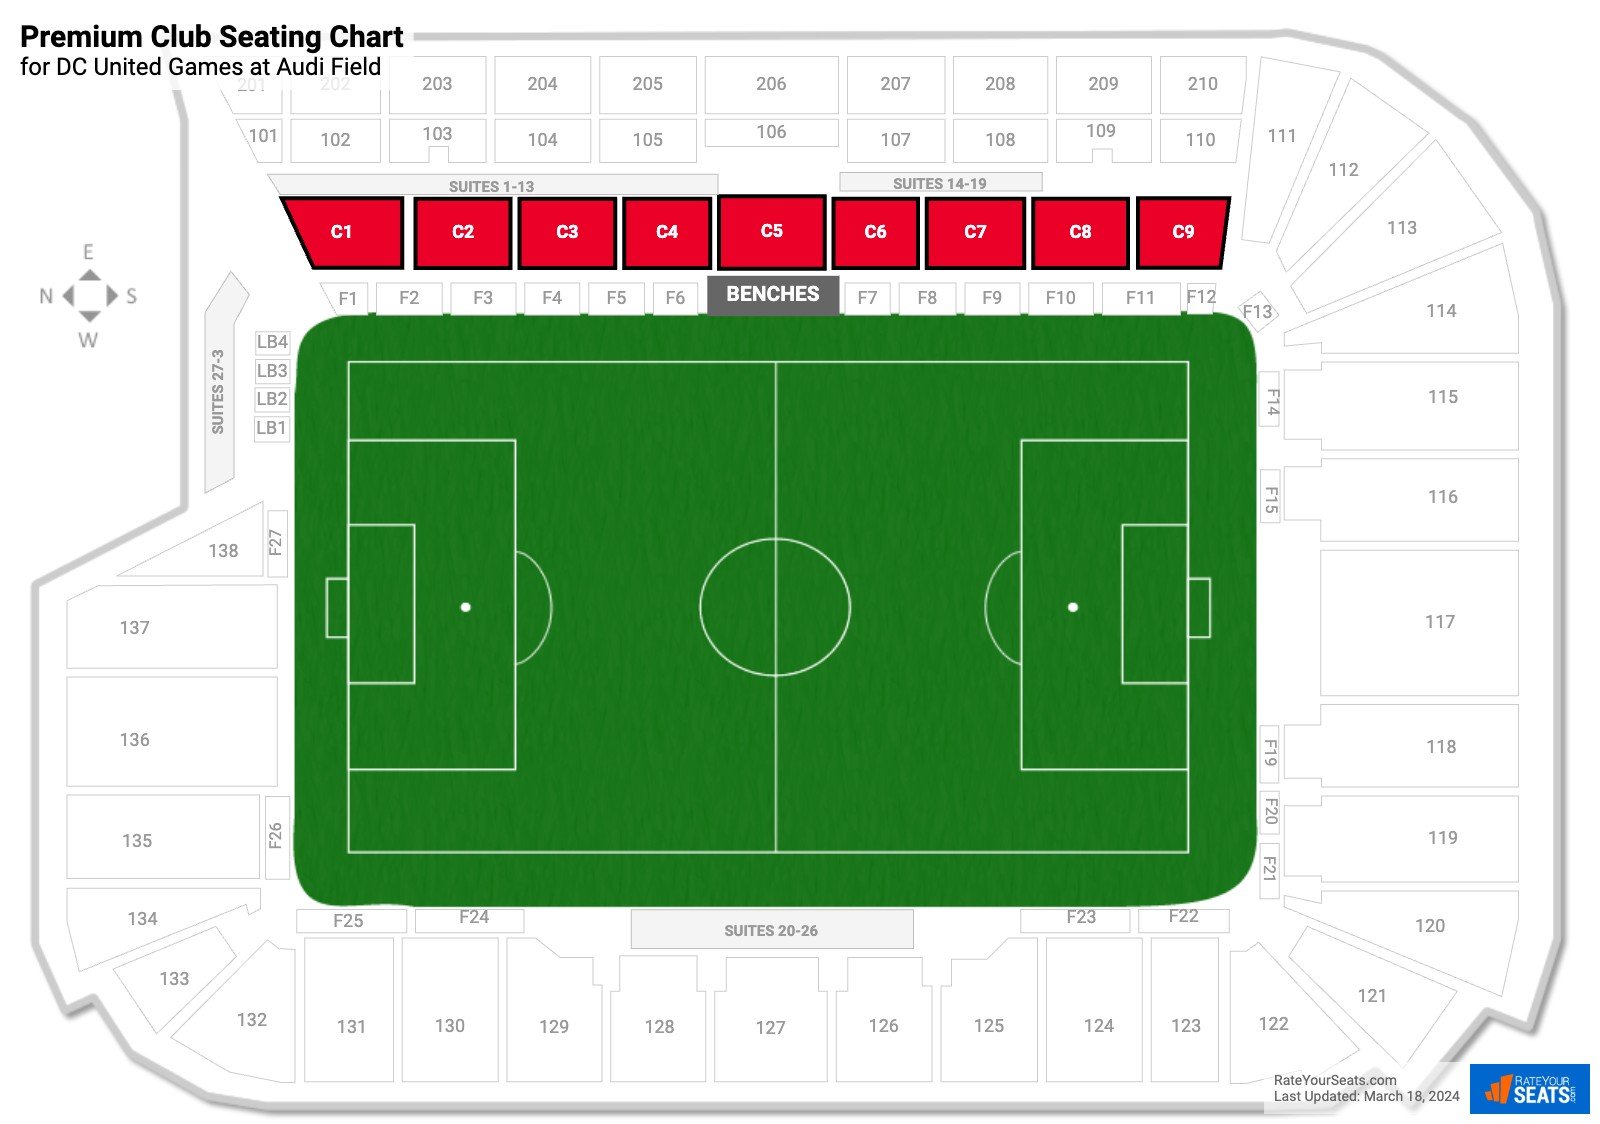 DC United EagleBank Club Seating Chart at Audi Field